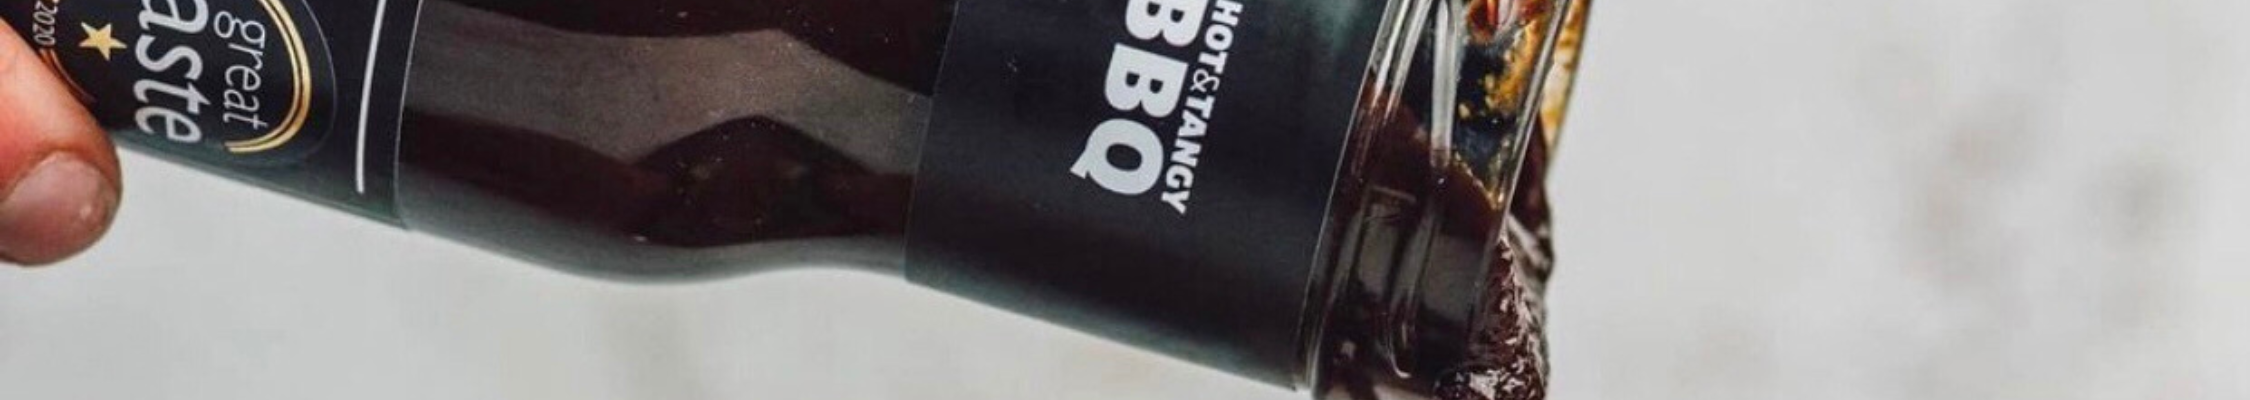 bbq sauce bottle